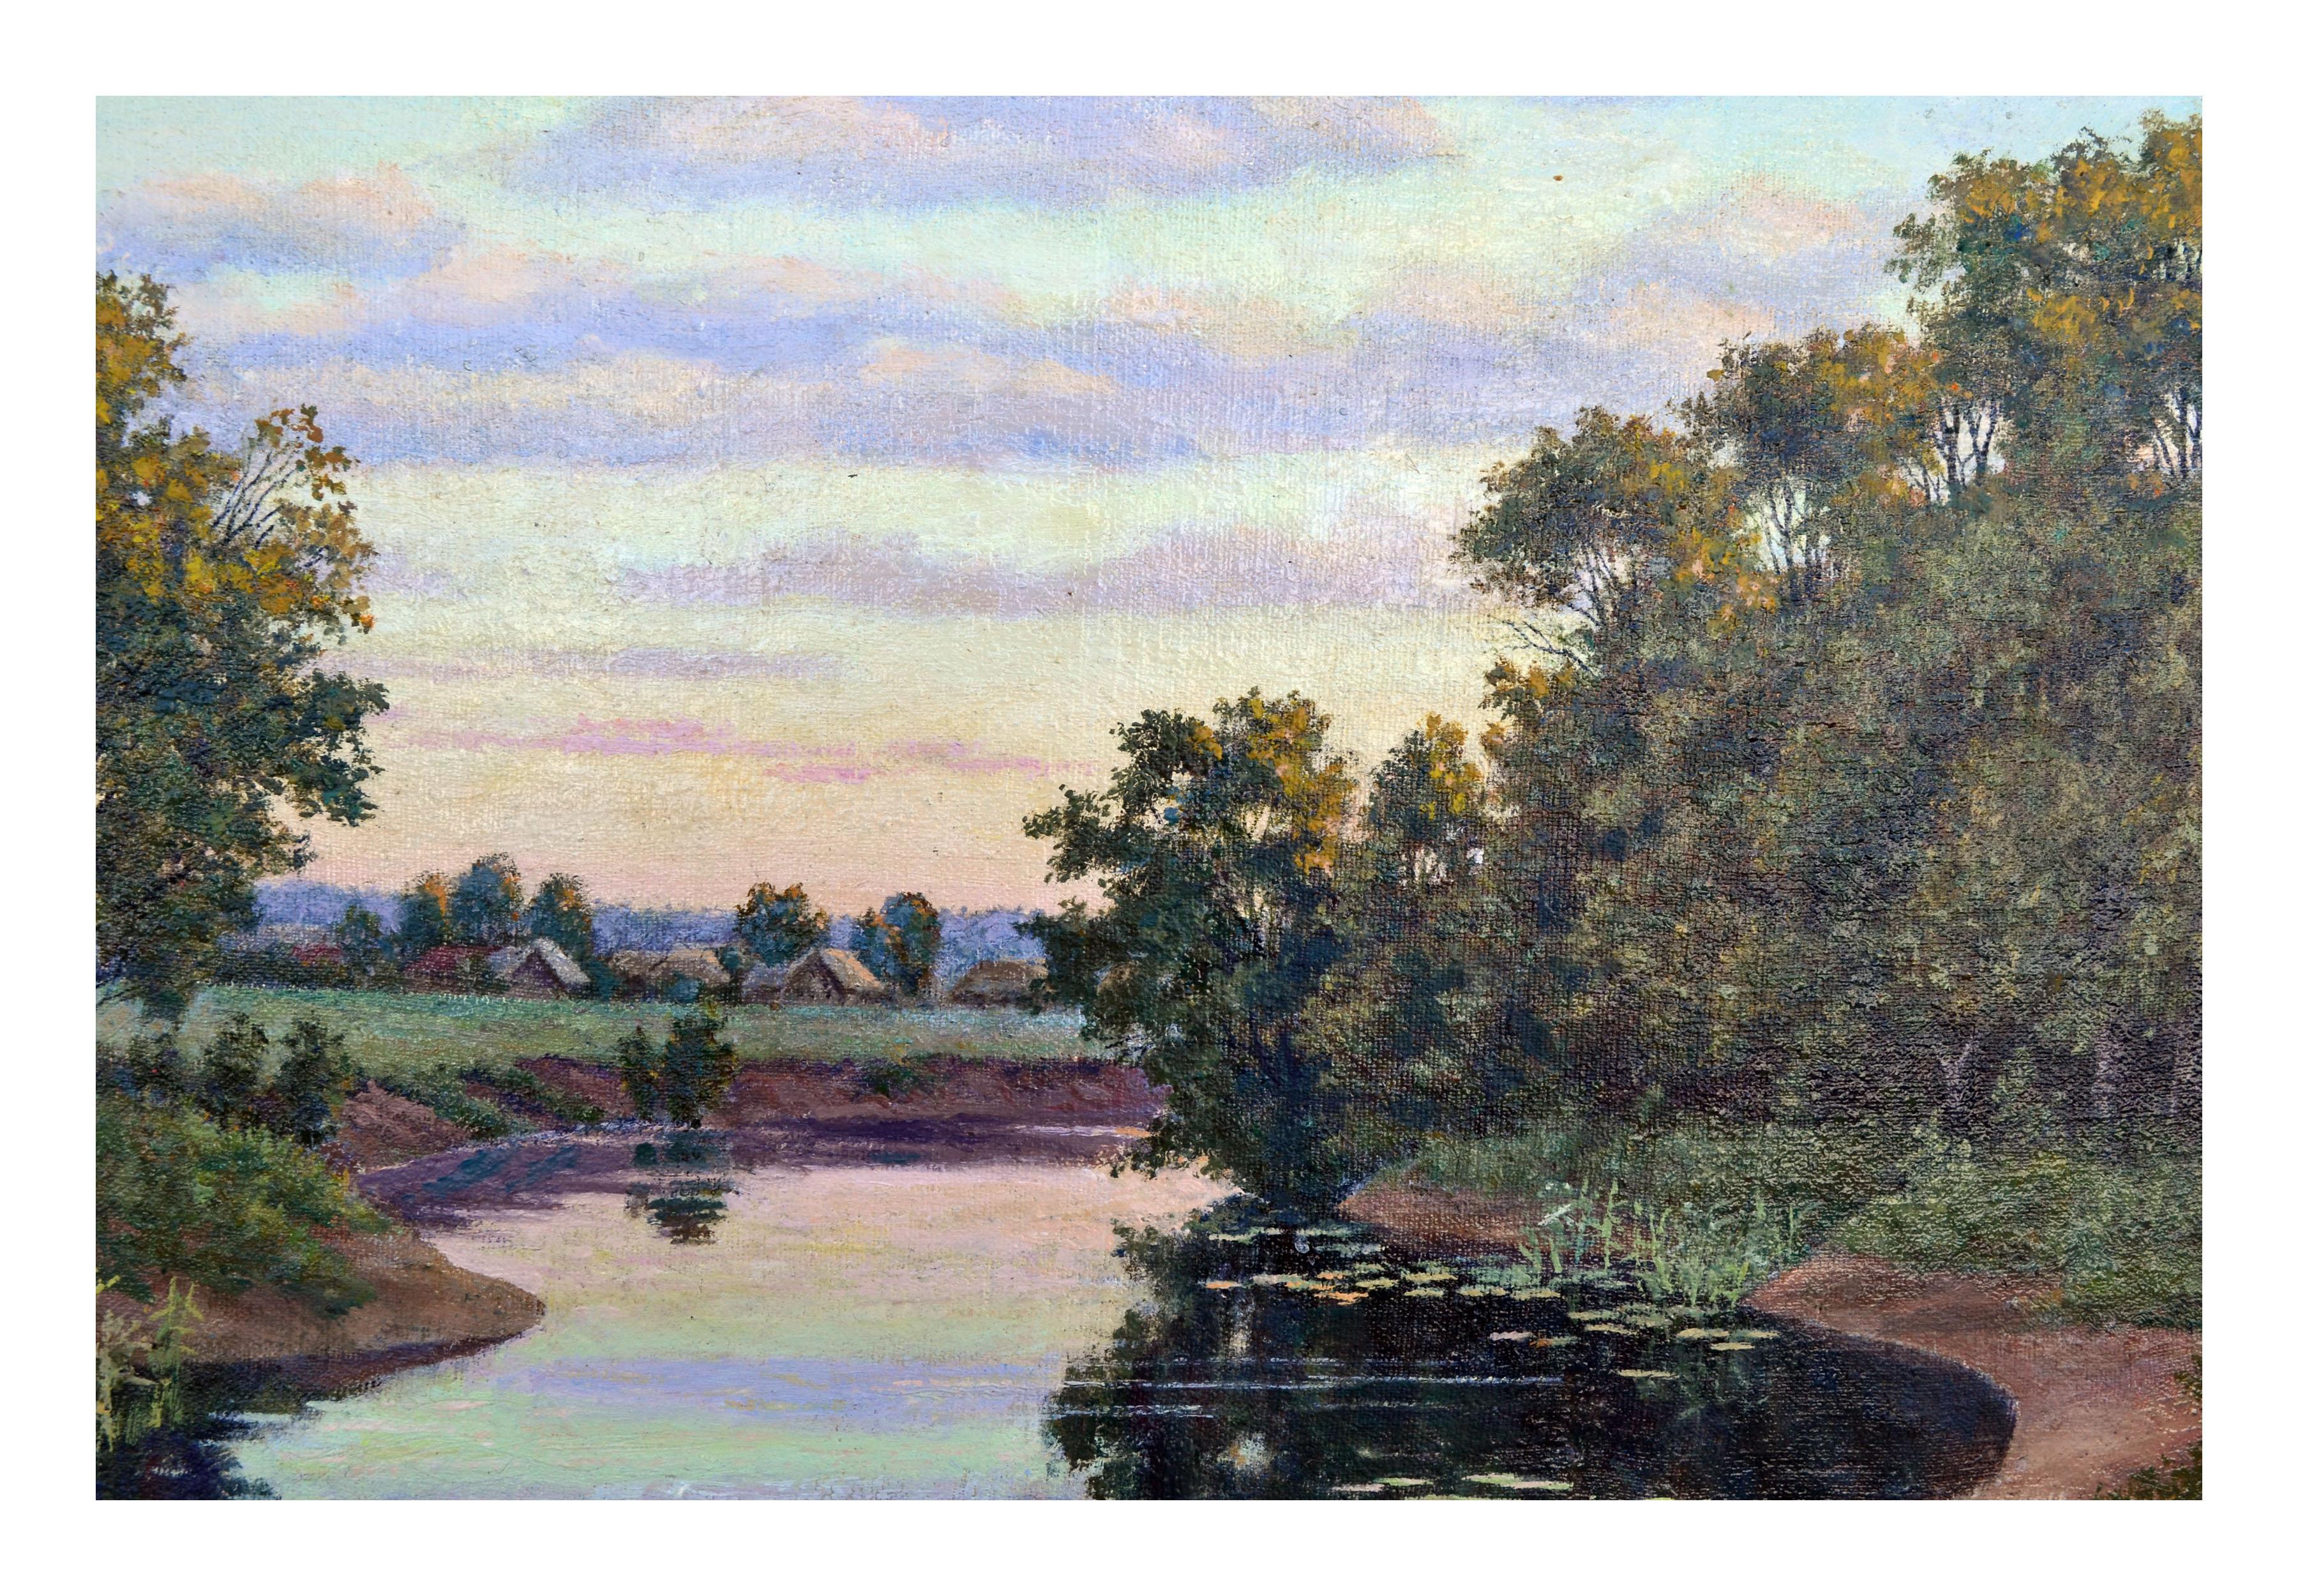 Un paysage tranquille d'après Antanas Žmuidzinavičius - Réalisme Painting par  Antanas Zemaitis